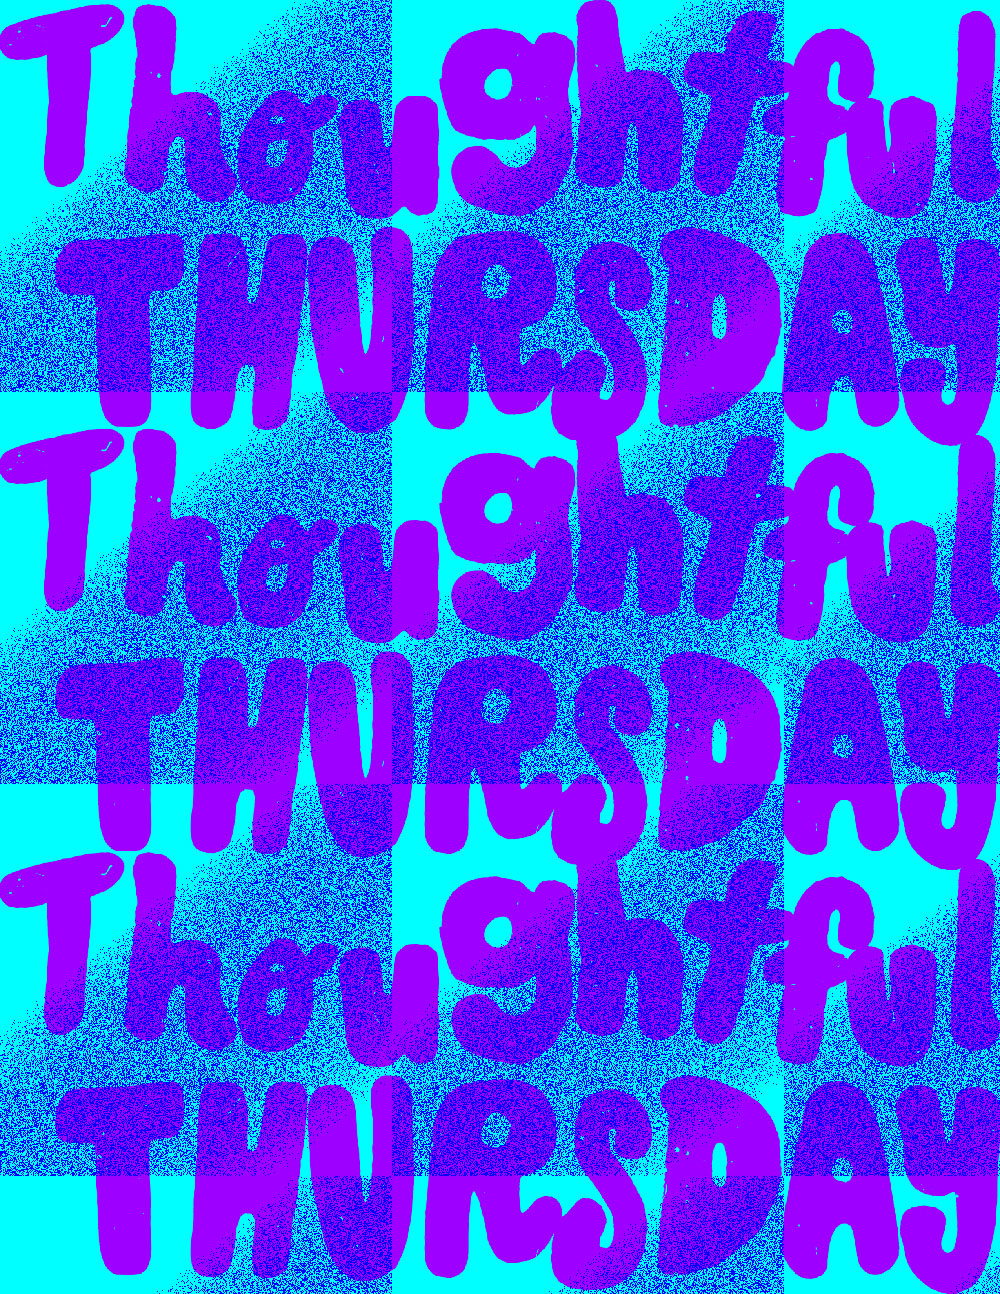 Thoughtful Thursday – bk2hk